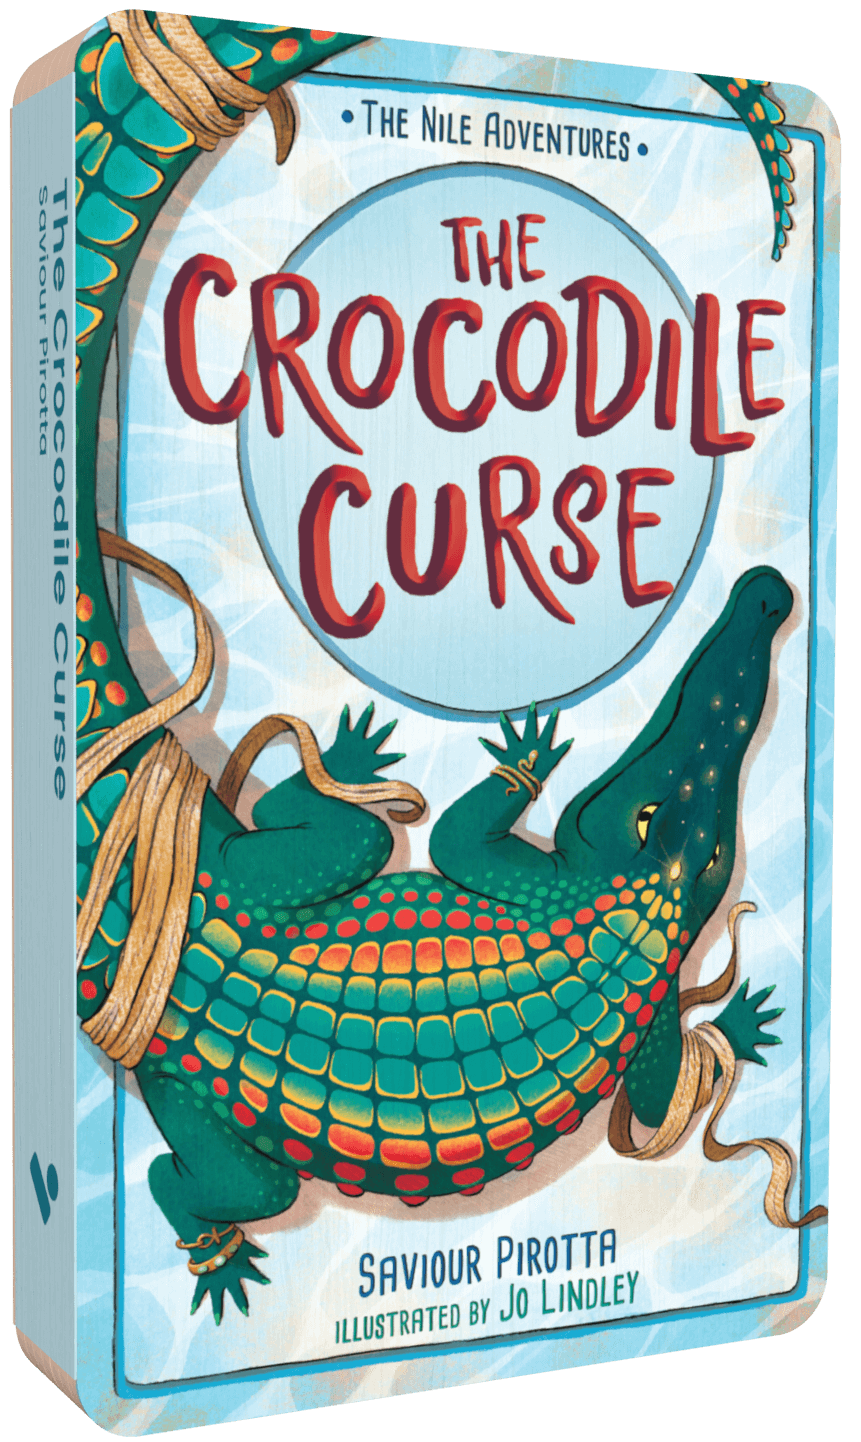 The Crocodile Curse